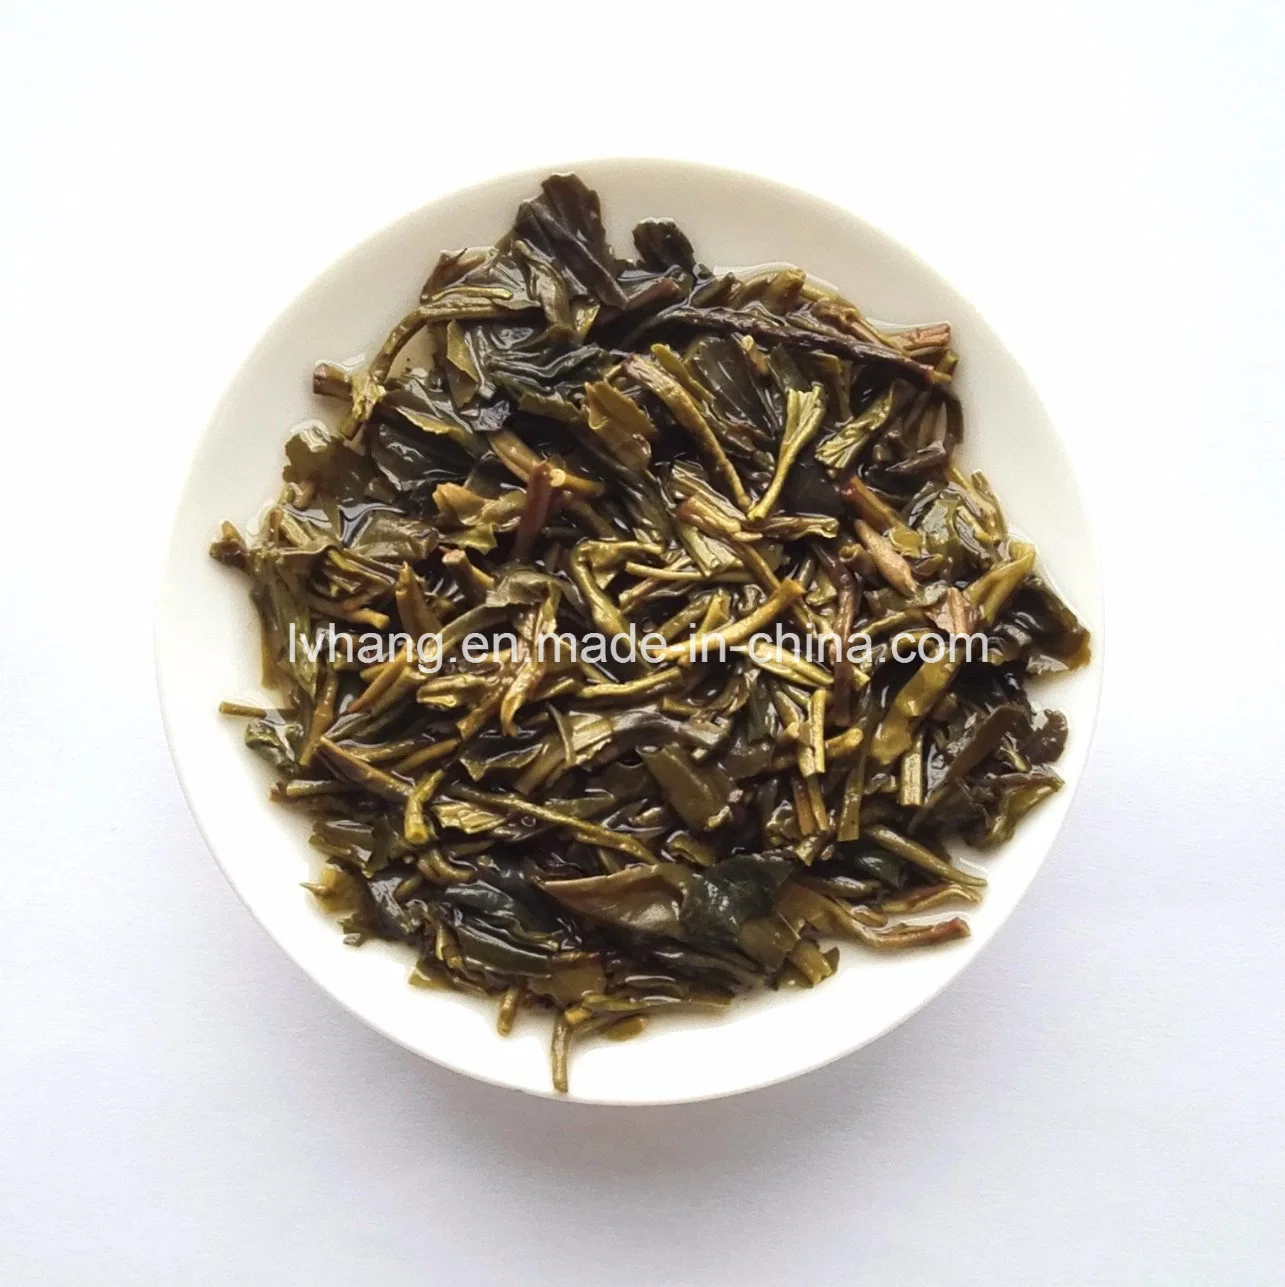 Jasmine Green Tea (EU Standard)